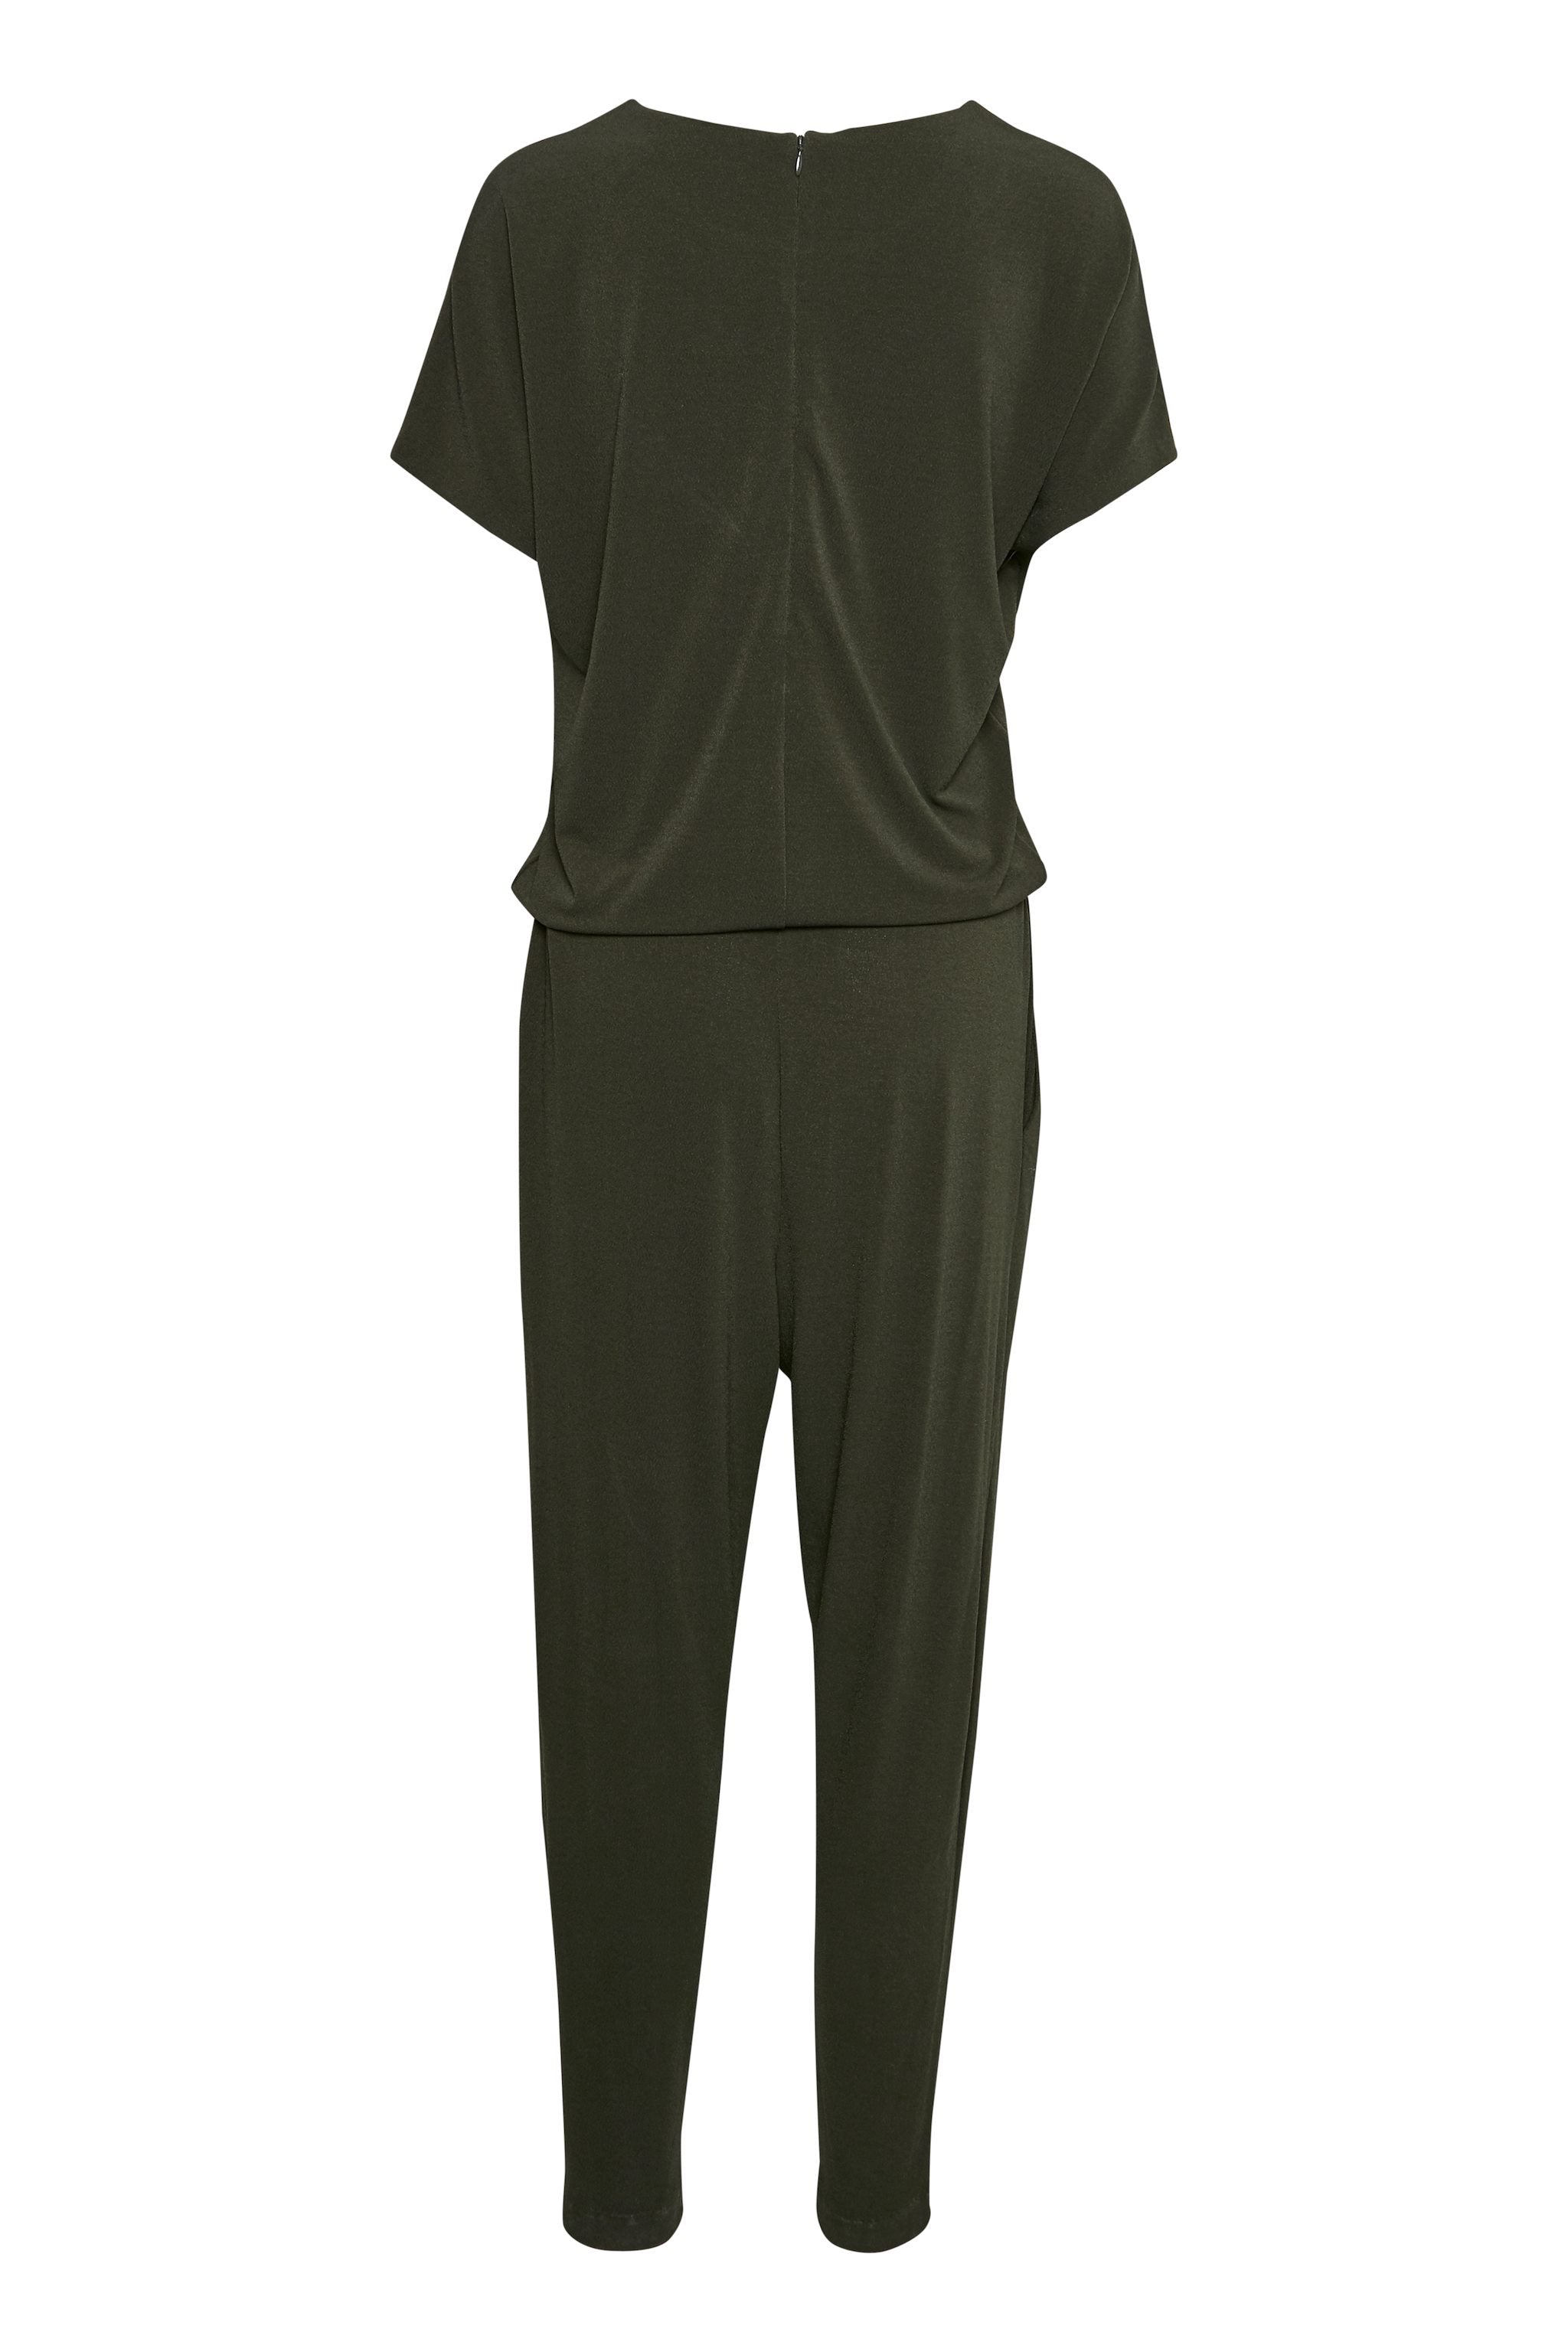 Siri Jumpsuit - Olive Leaf - InWear - Jumpsuits - VILLOID.no